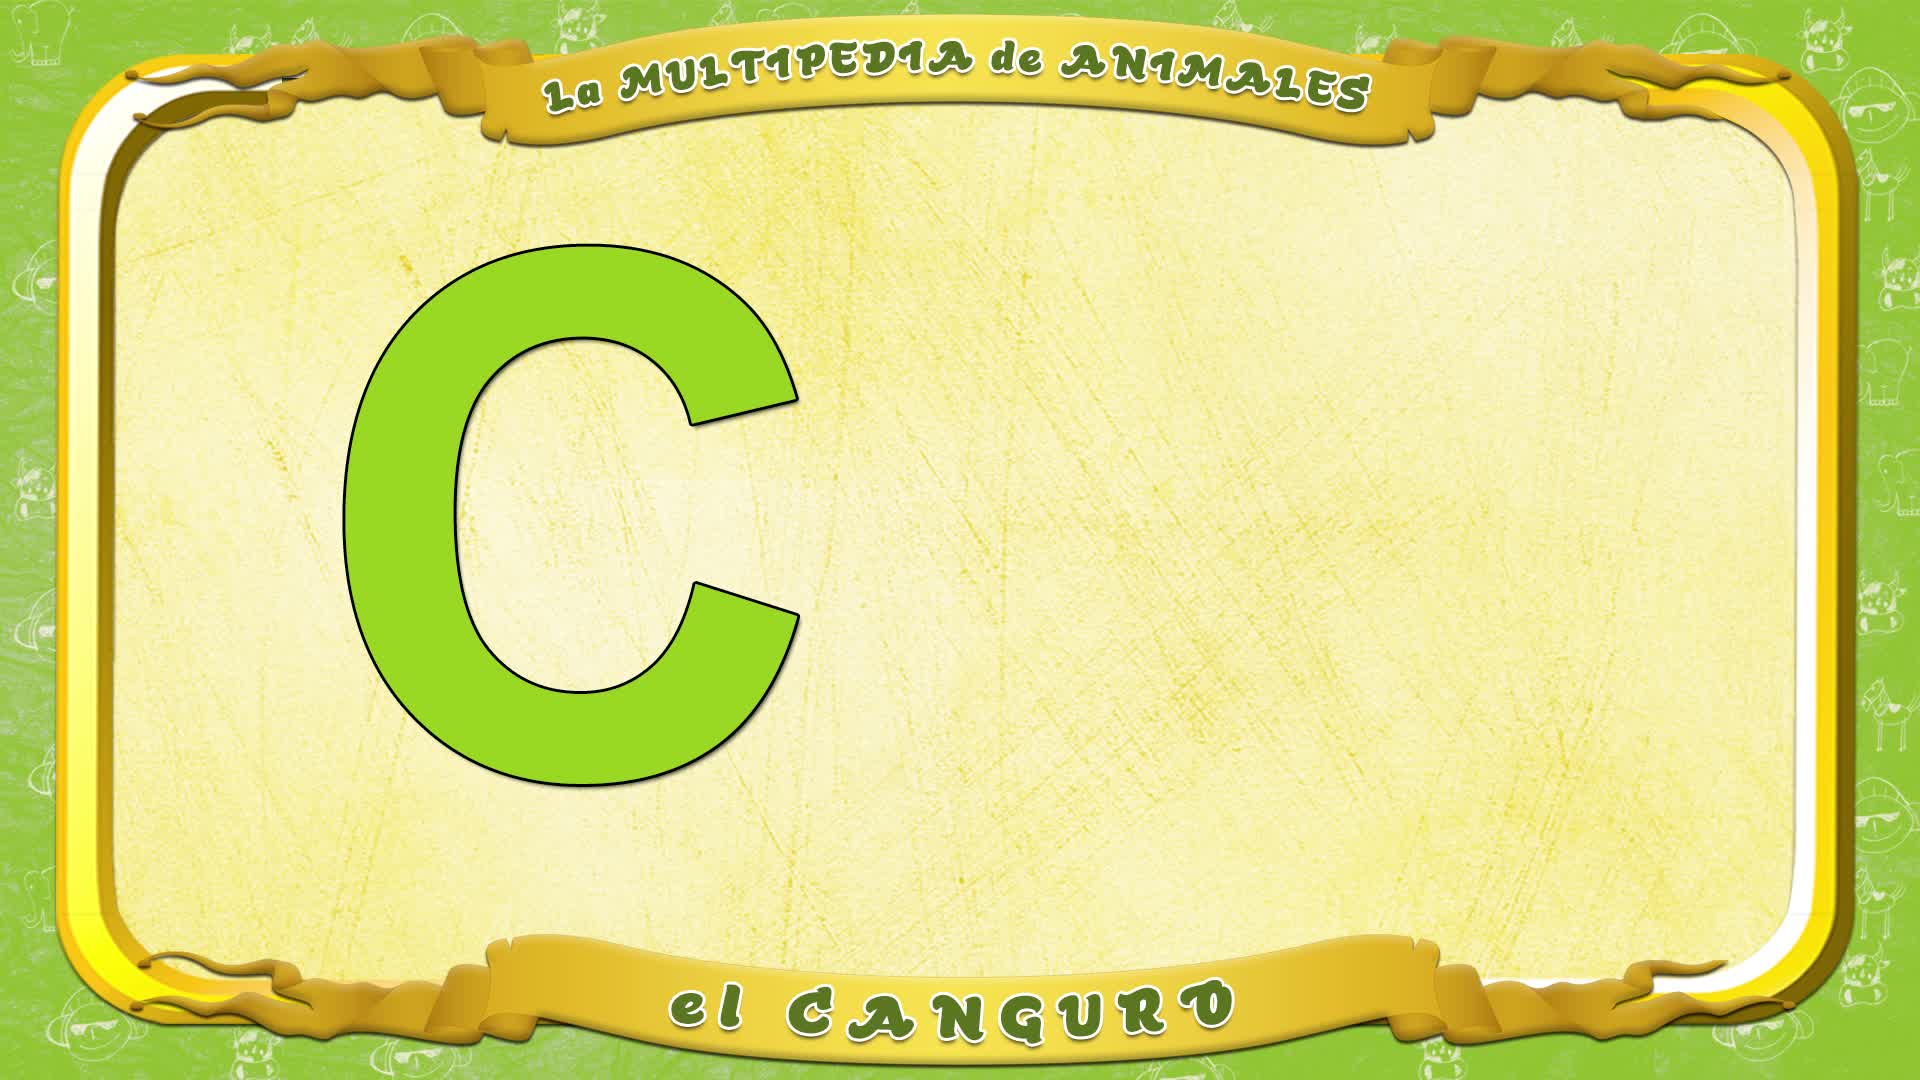 La Multipedia De Animales Letra C El Canguro смотреть онлайн